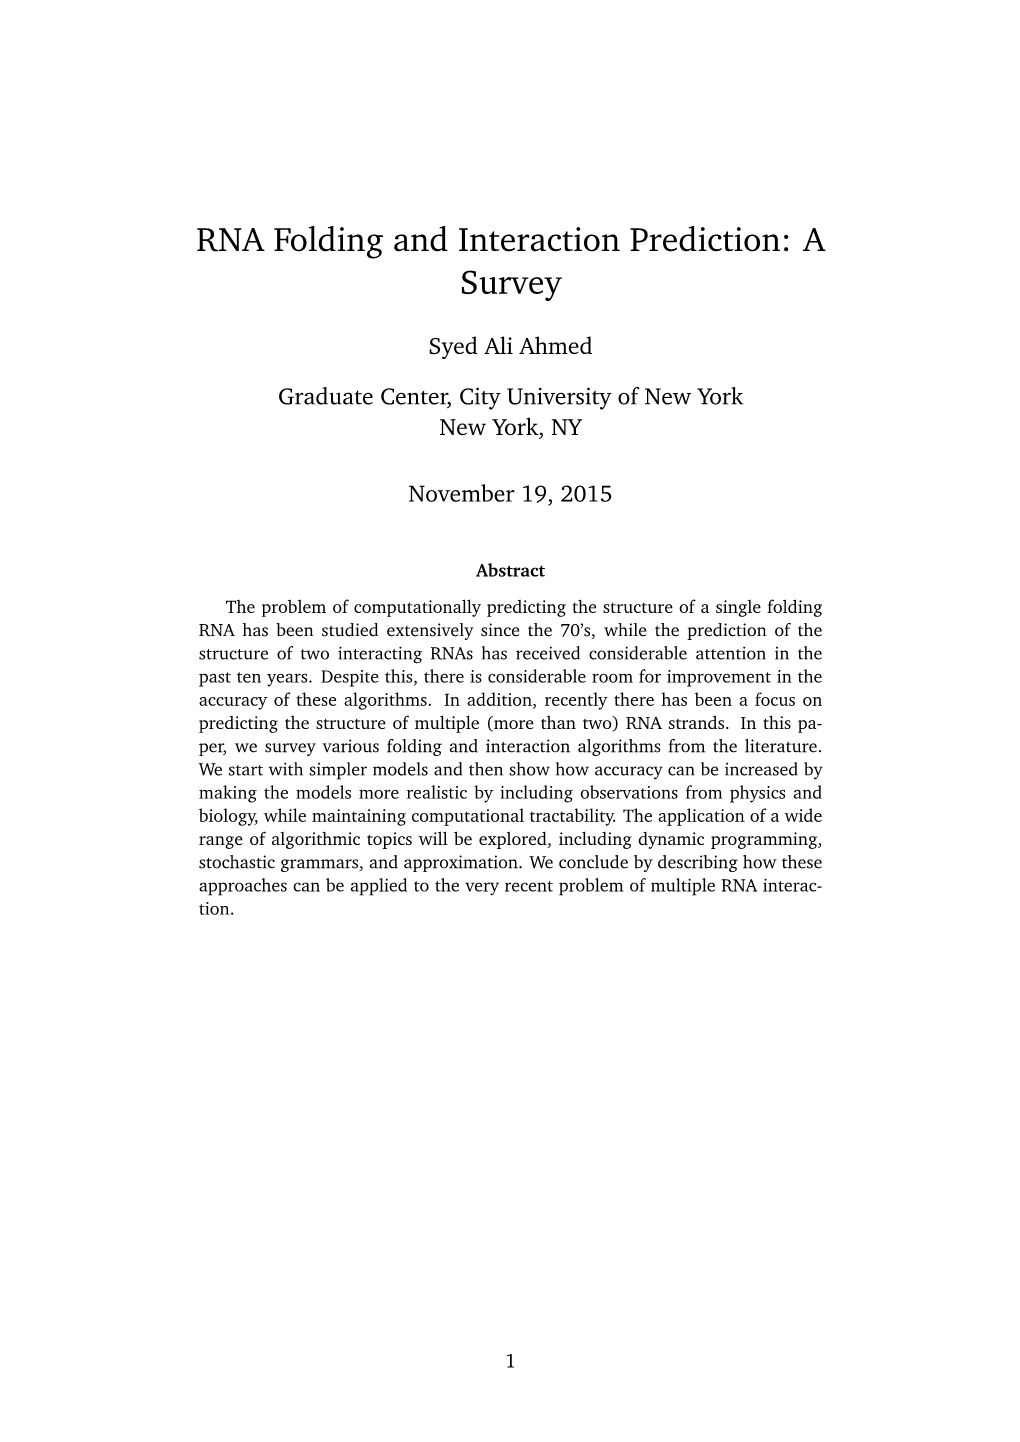 RNA Folding and Interaction Prediction: a Survey